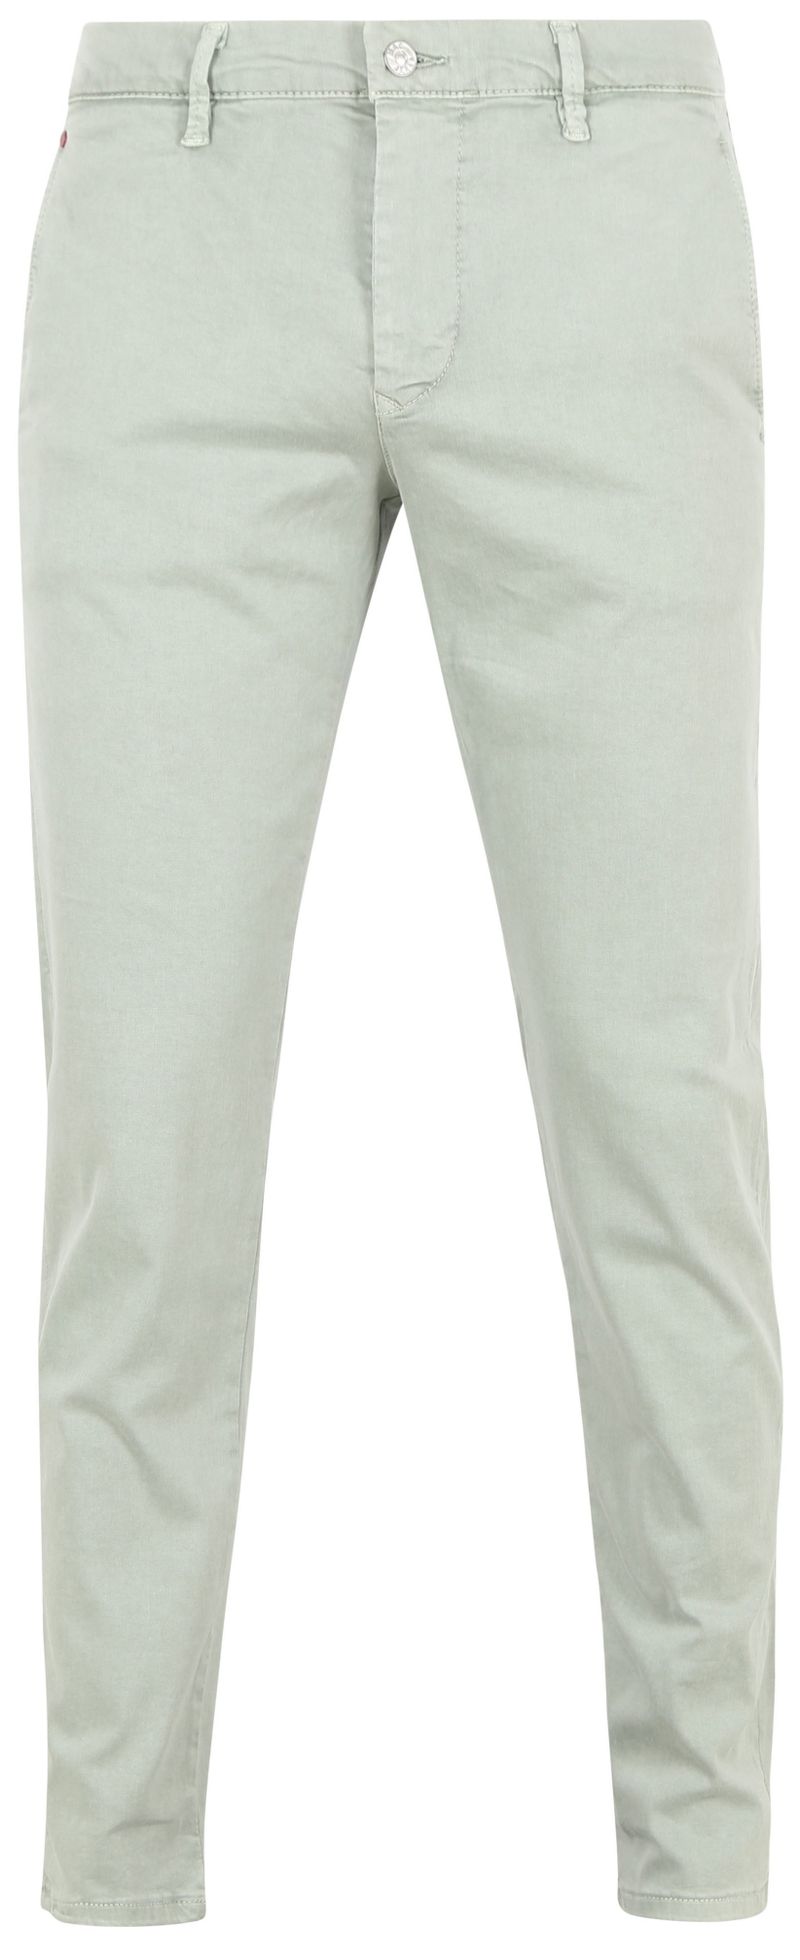 Mac Jeans Driver Pants Hellgrün - Größe W 34 - L 32 von MAC